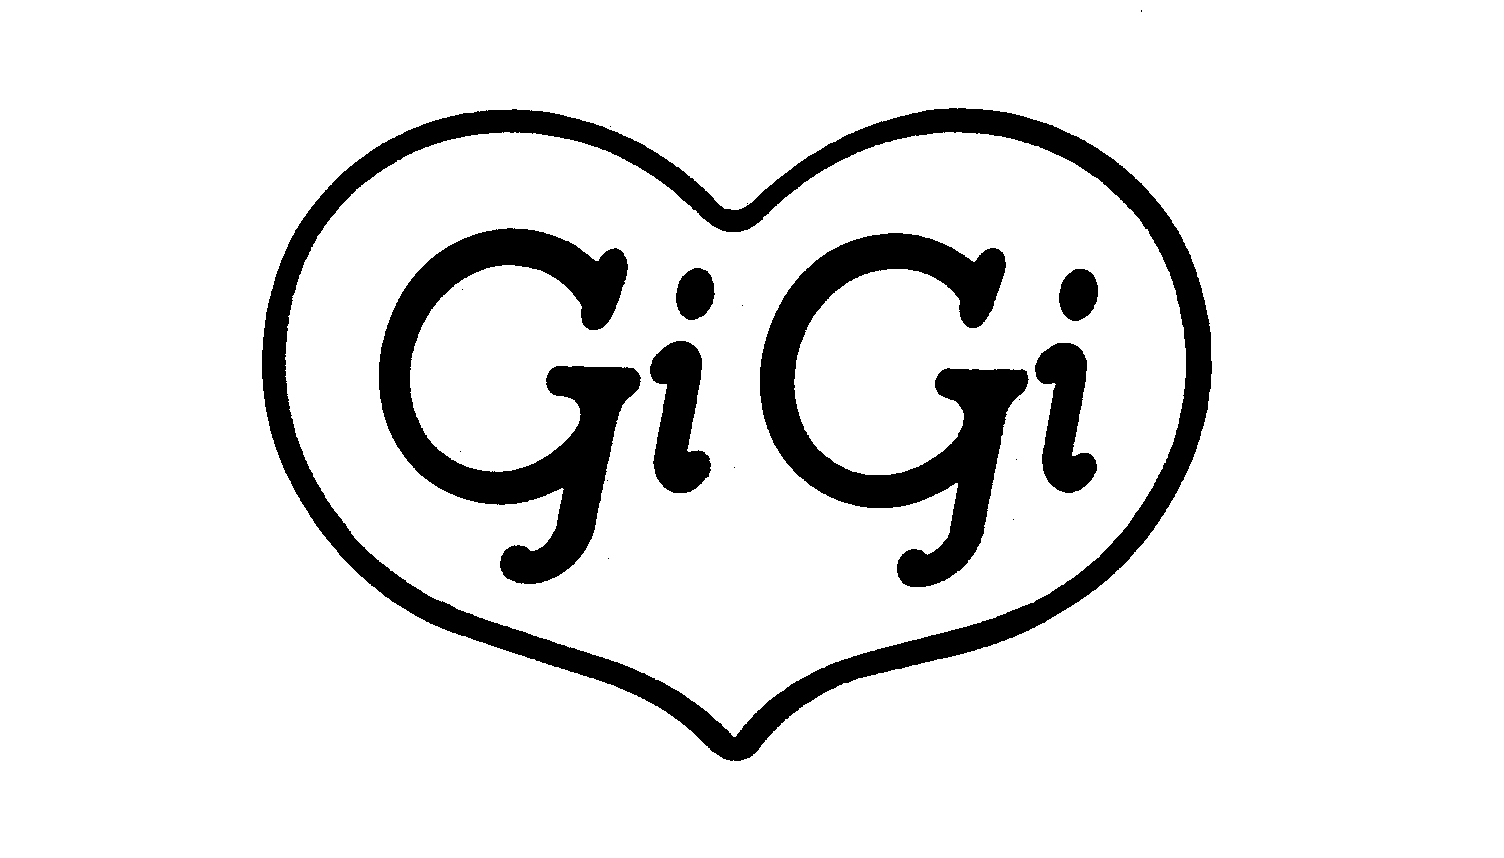 Trademark Logo GIGI